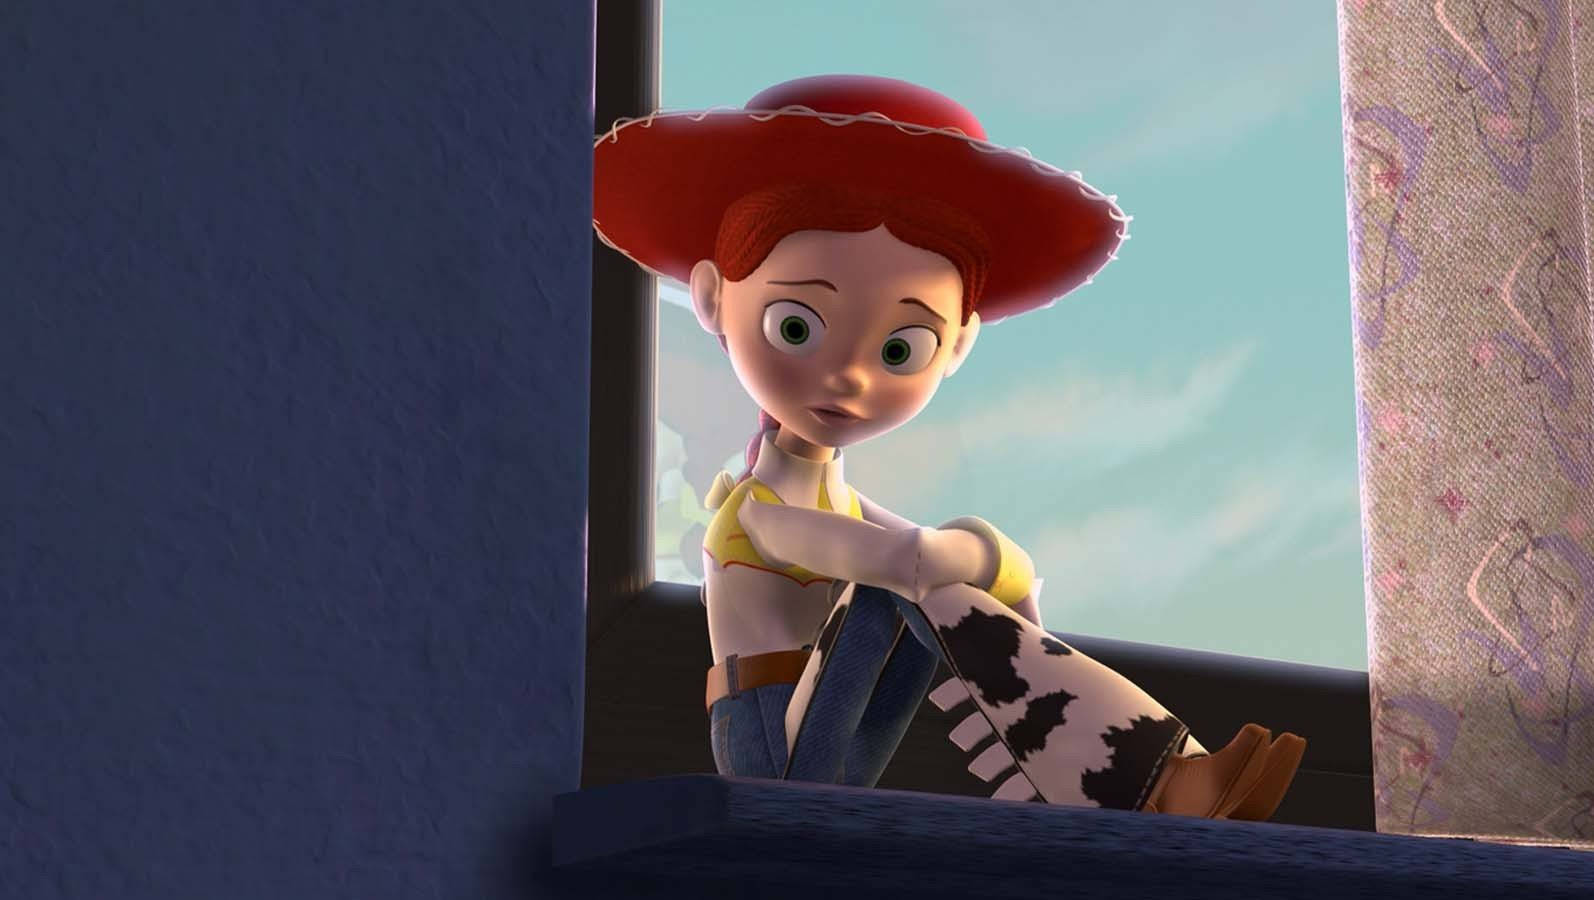 Jessie Toy Story Seated Beside Window Background